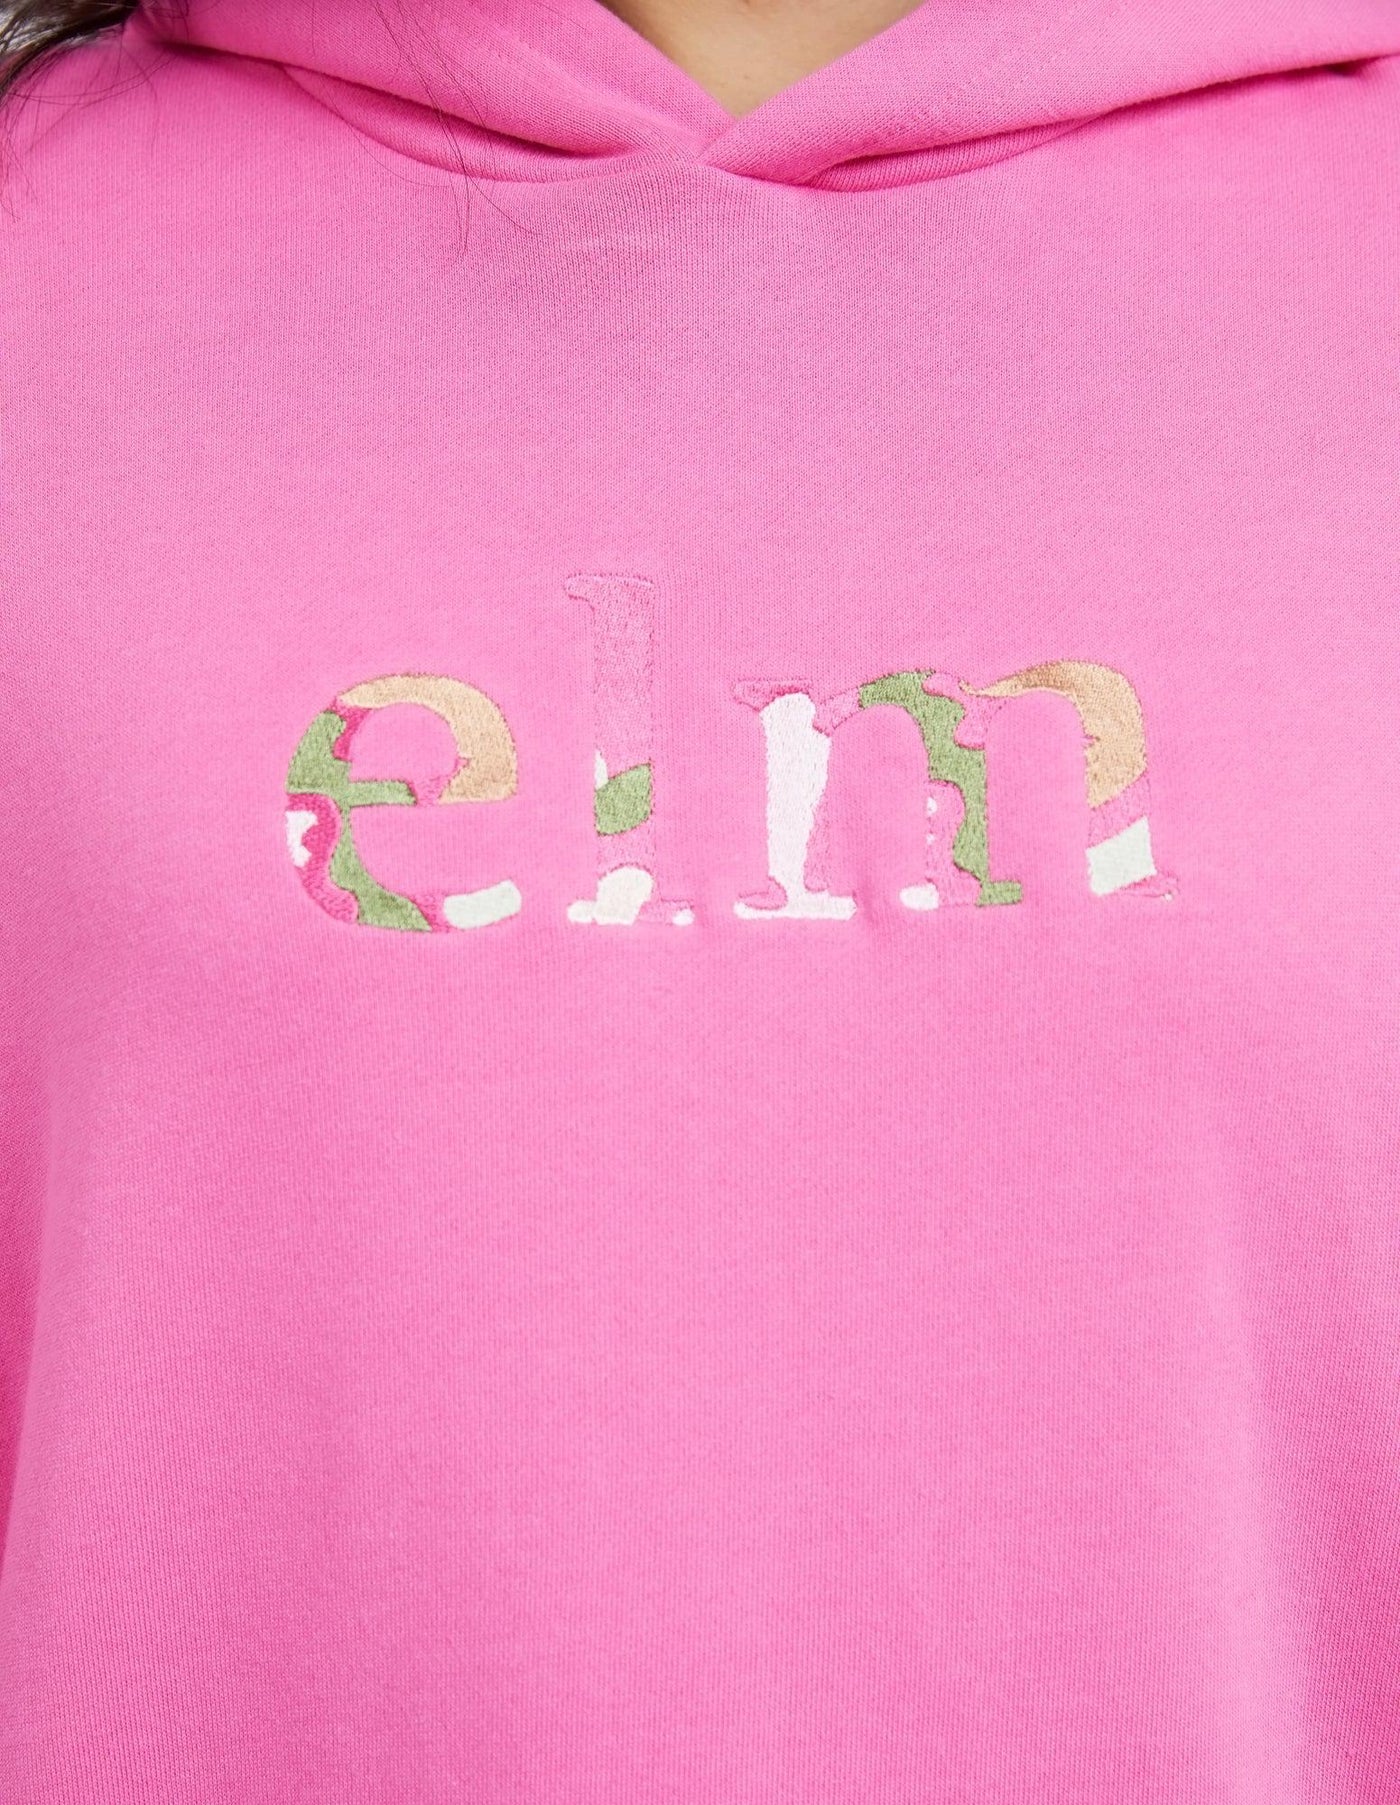 Staple Hoody - Shocking Pink-Elm Lifestyle-Lima & Co